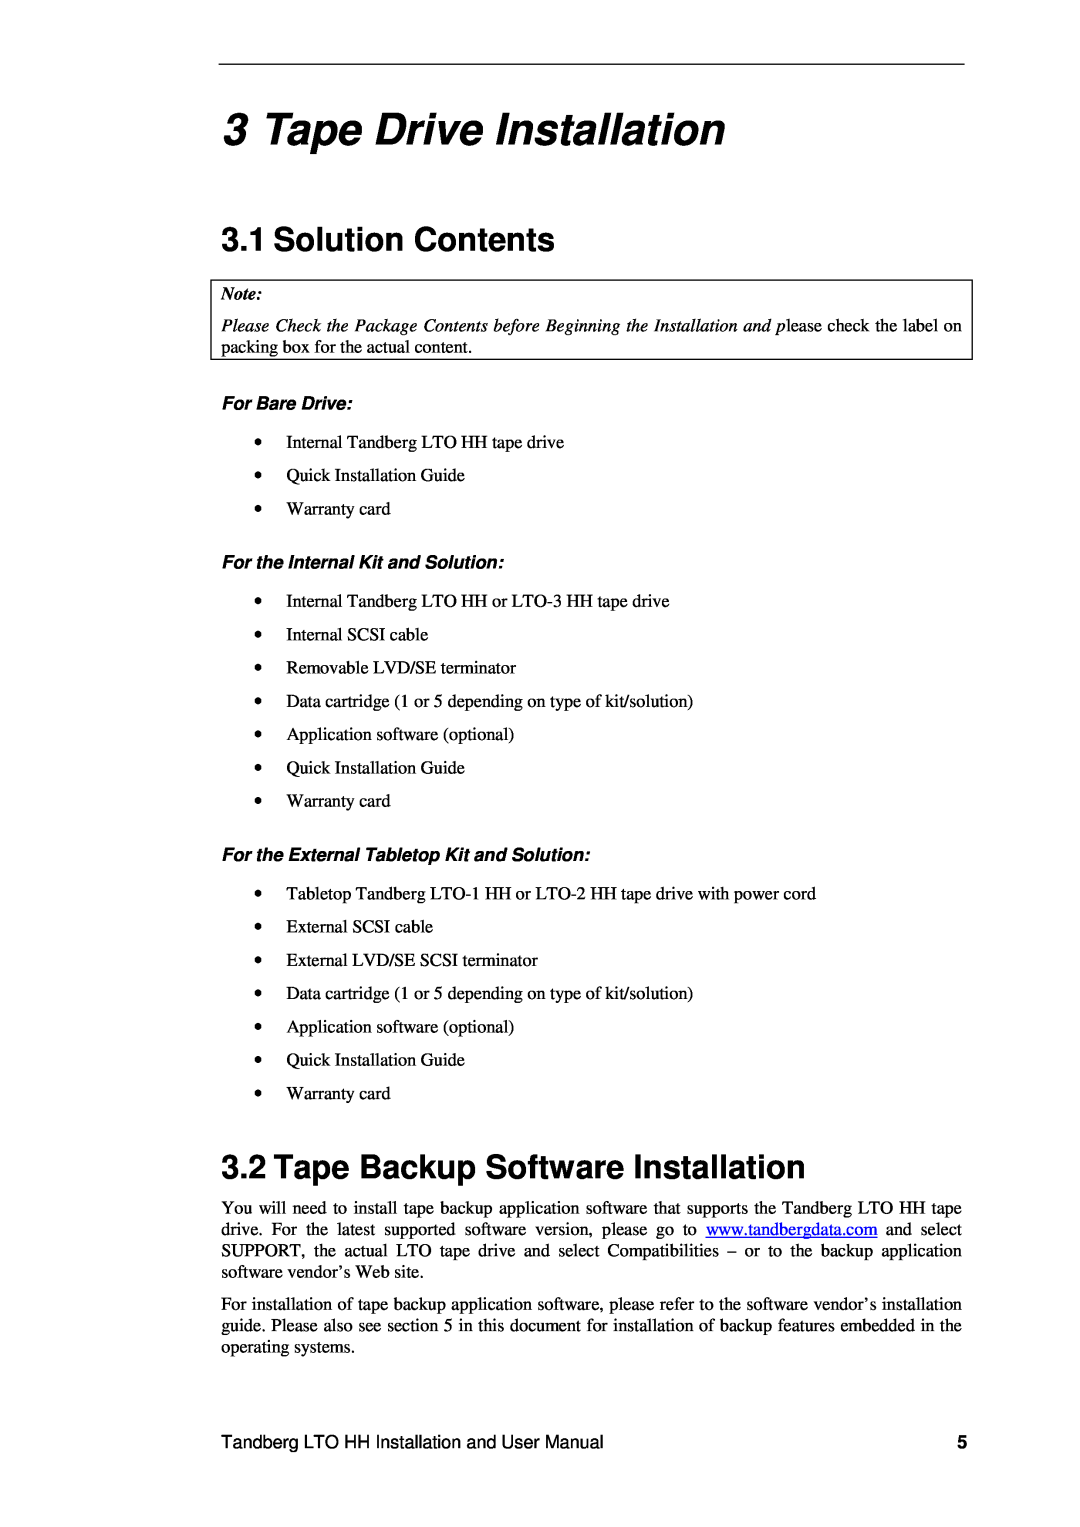 Tandberg Data LTO-3 HH, LTO-2 HH, LTO-1 HH Tape Drive Installation, Solution Contents, Tape Backup Software Installation 